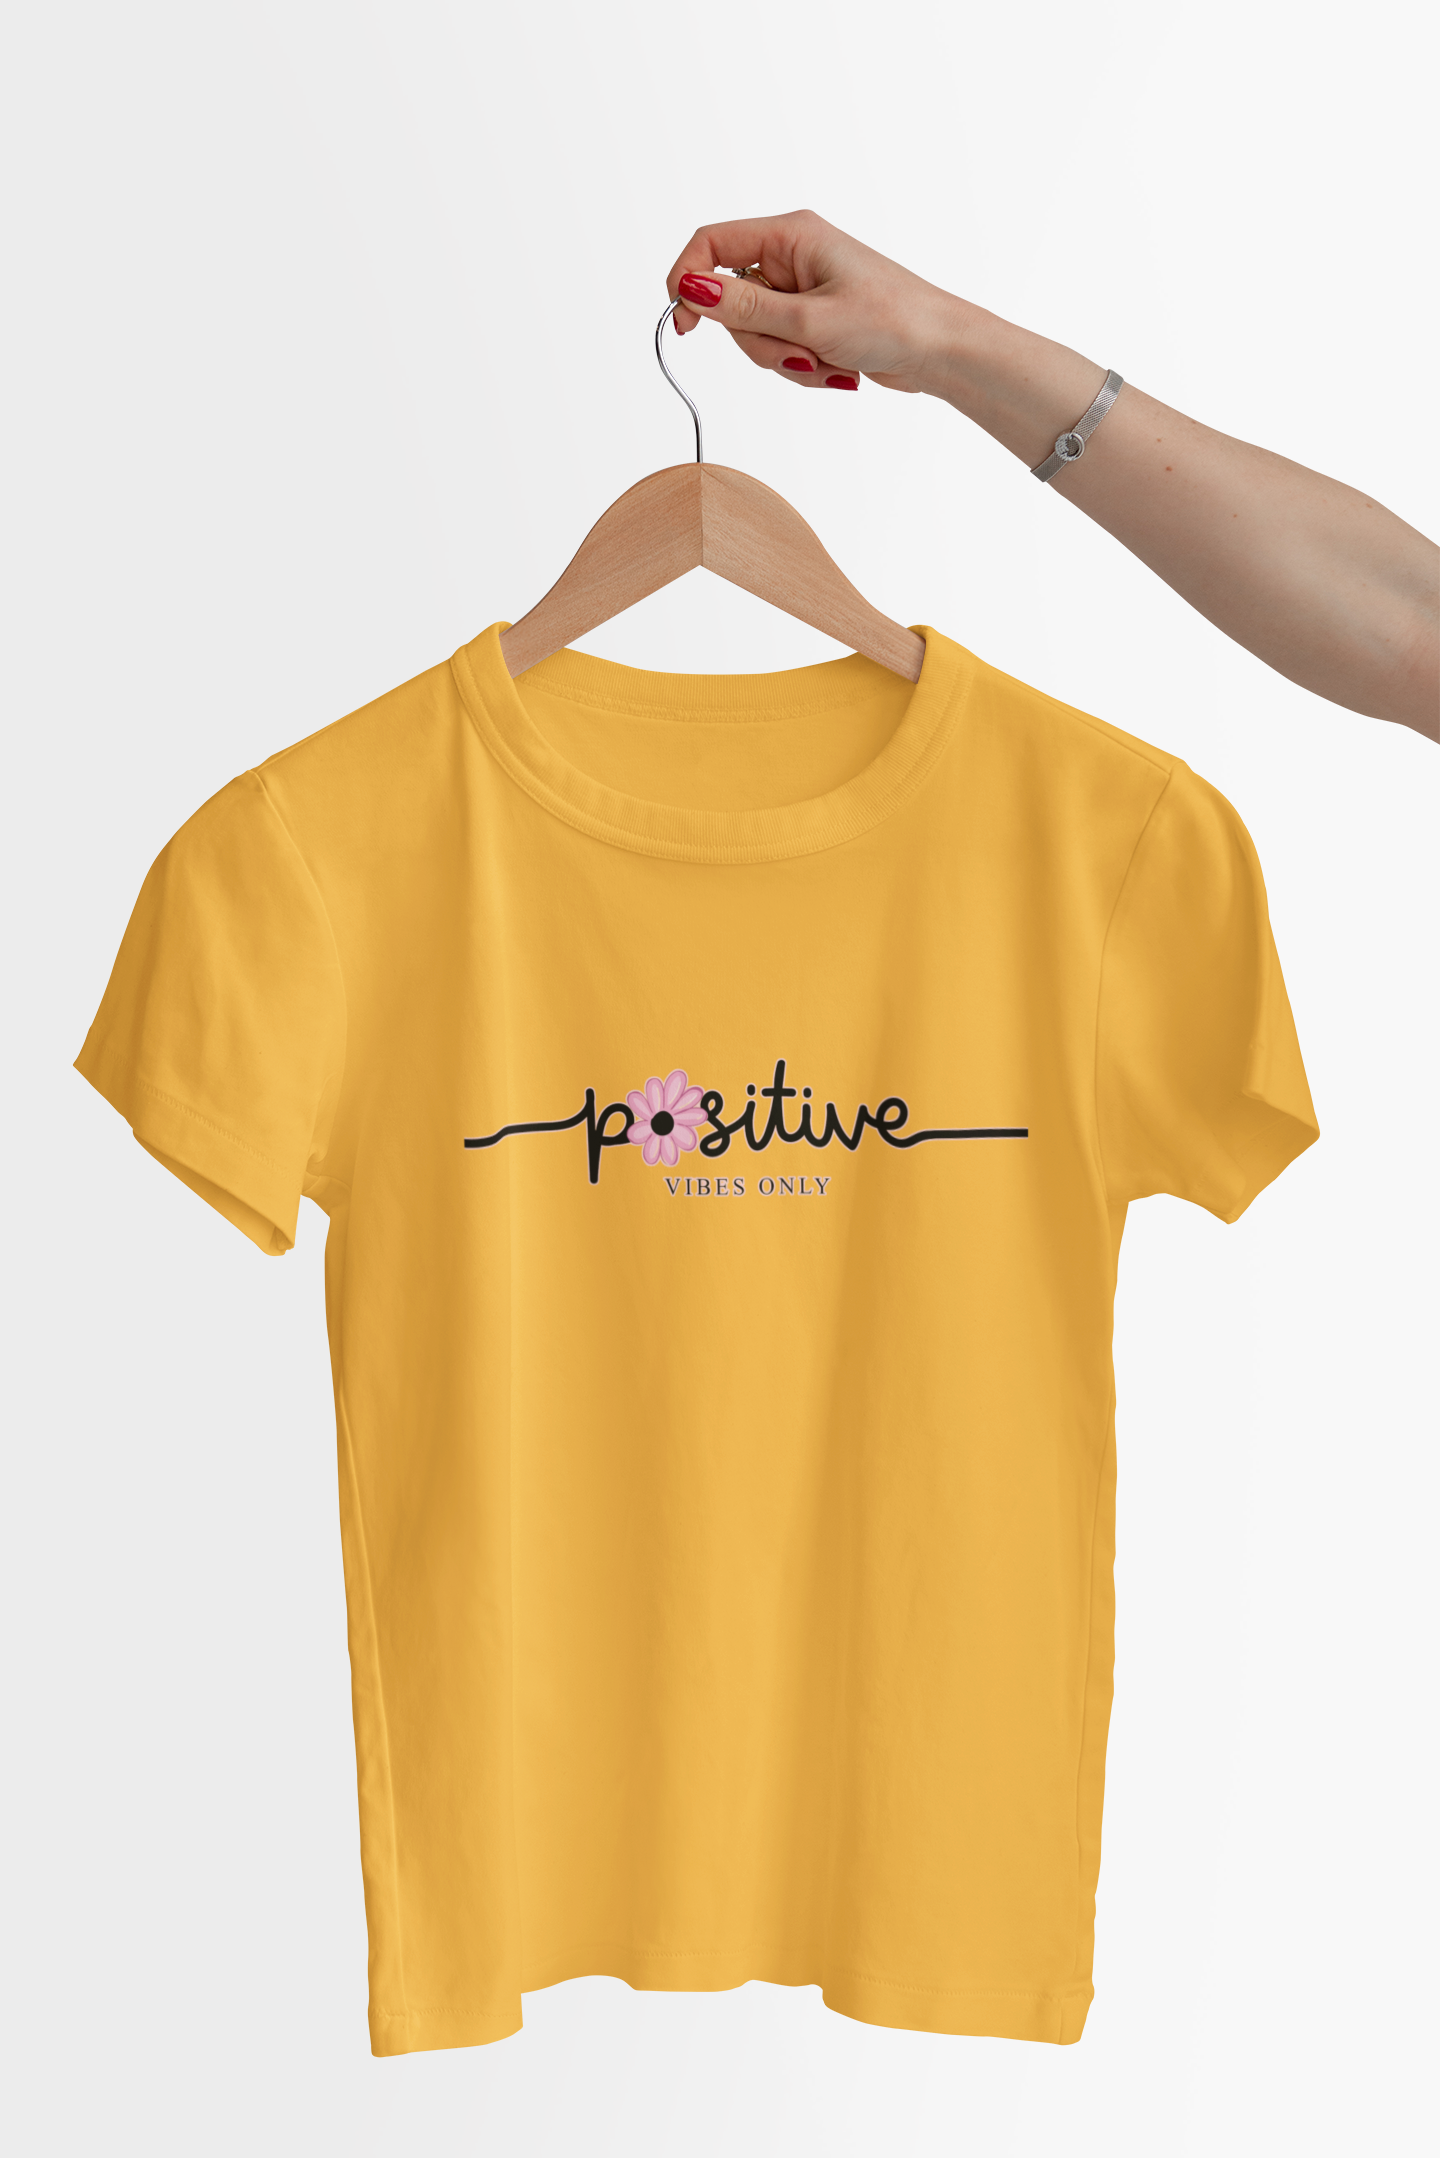 Positive Vibes - Adult T-Shirt